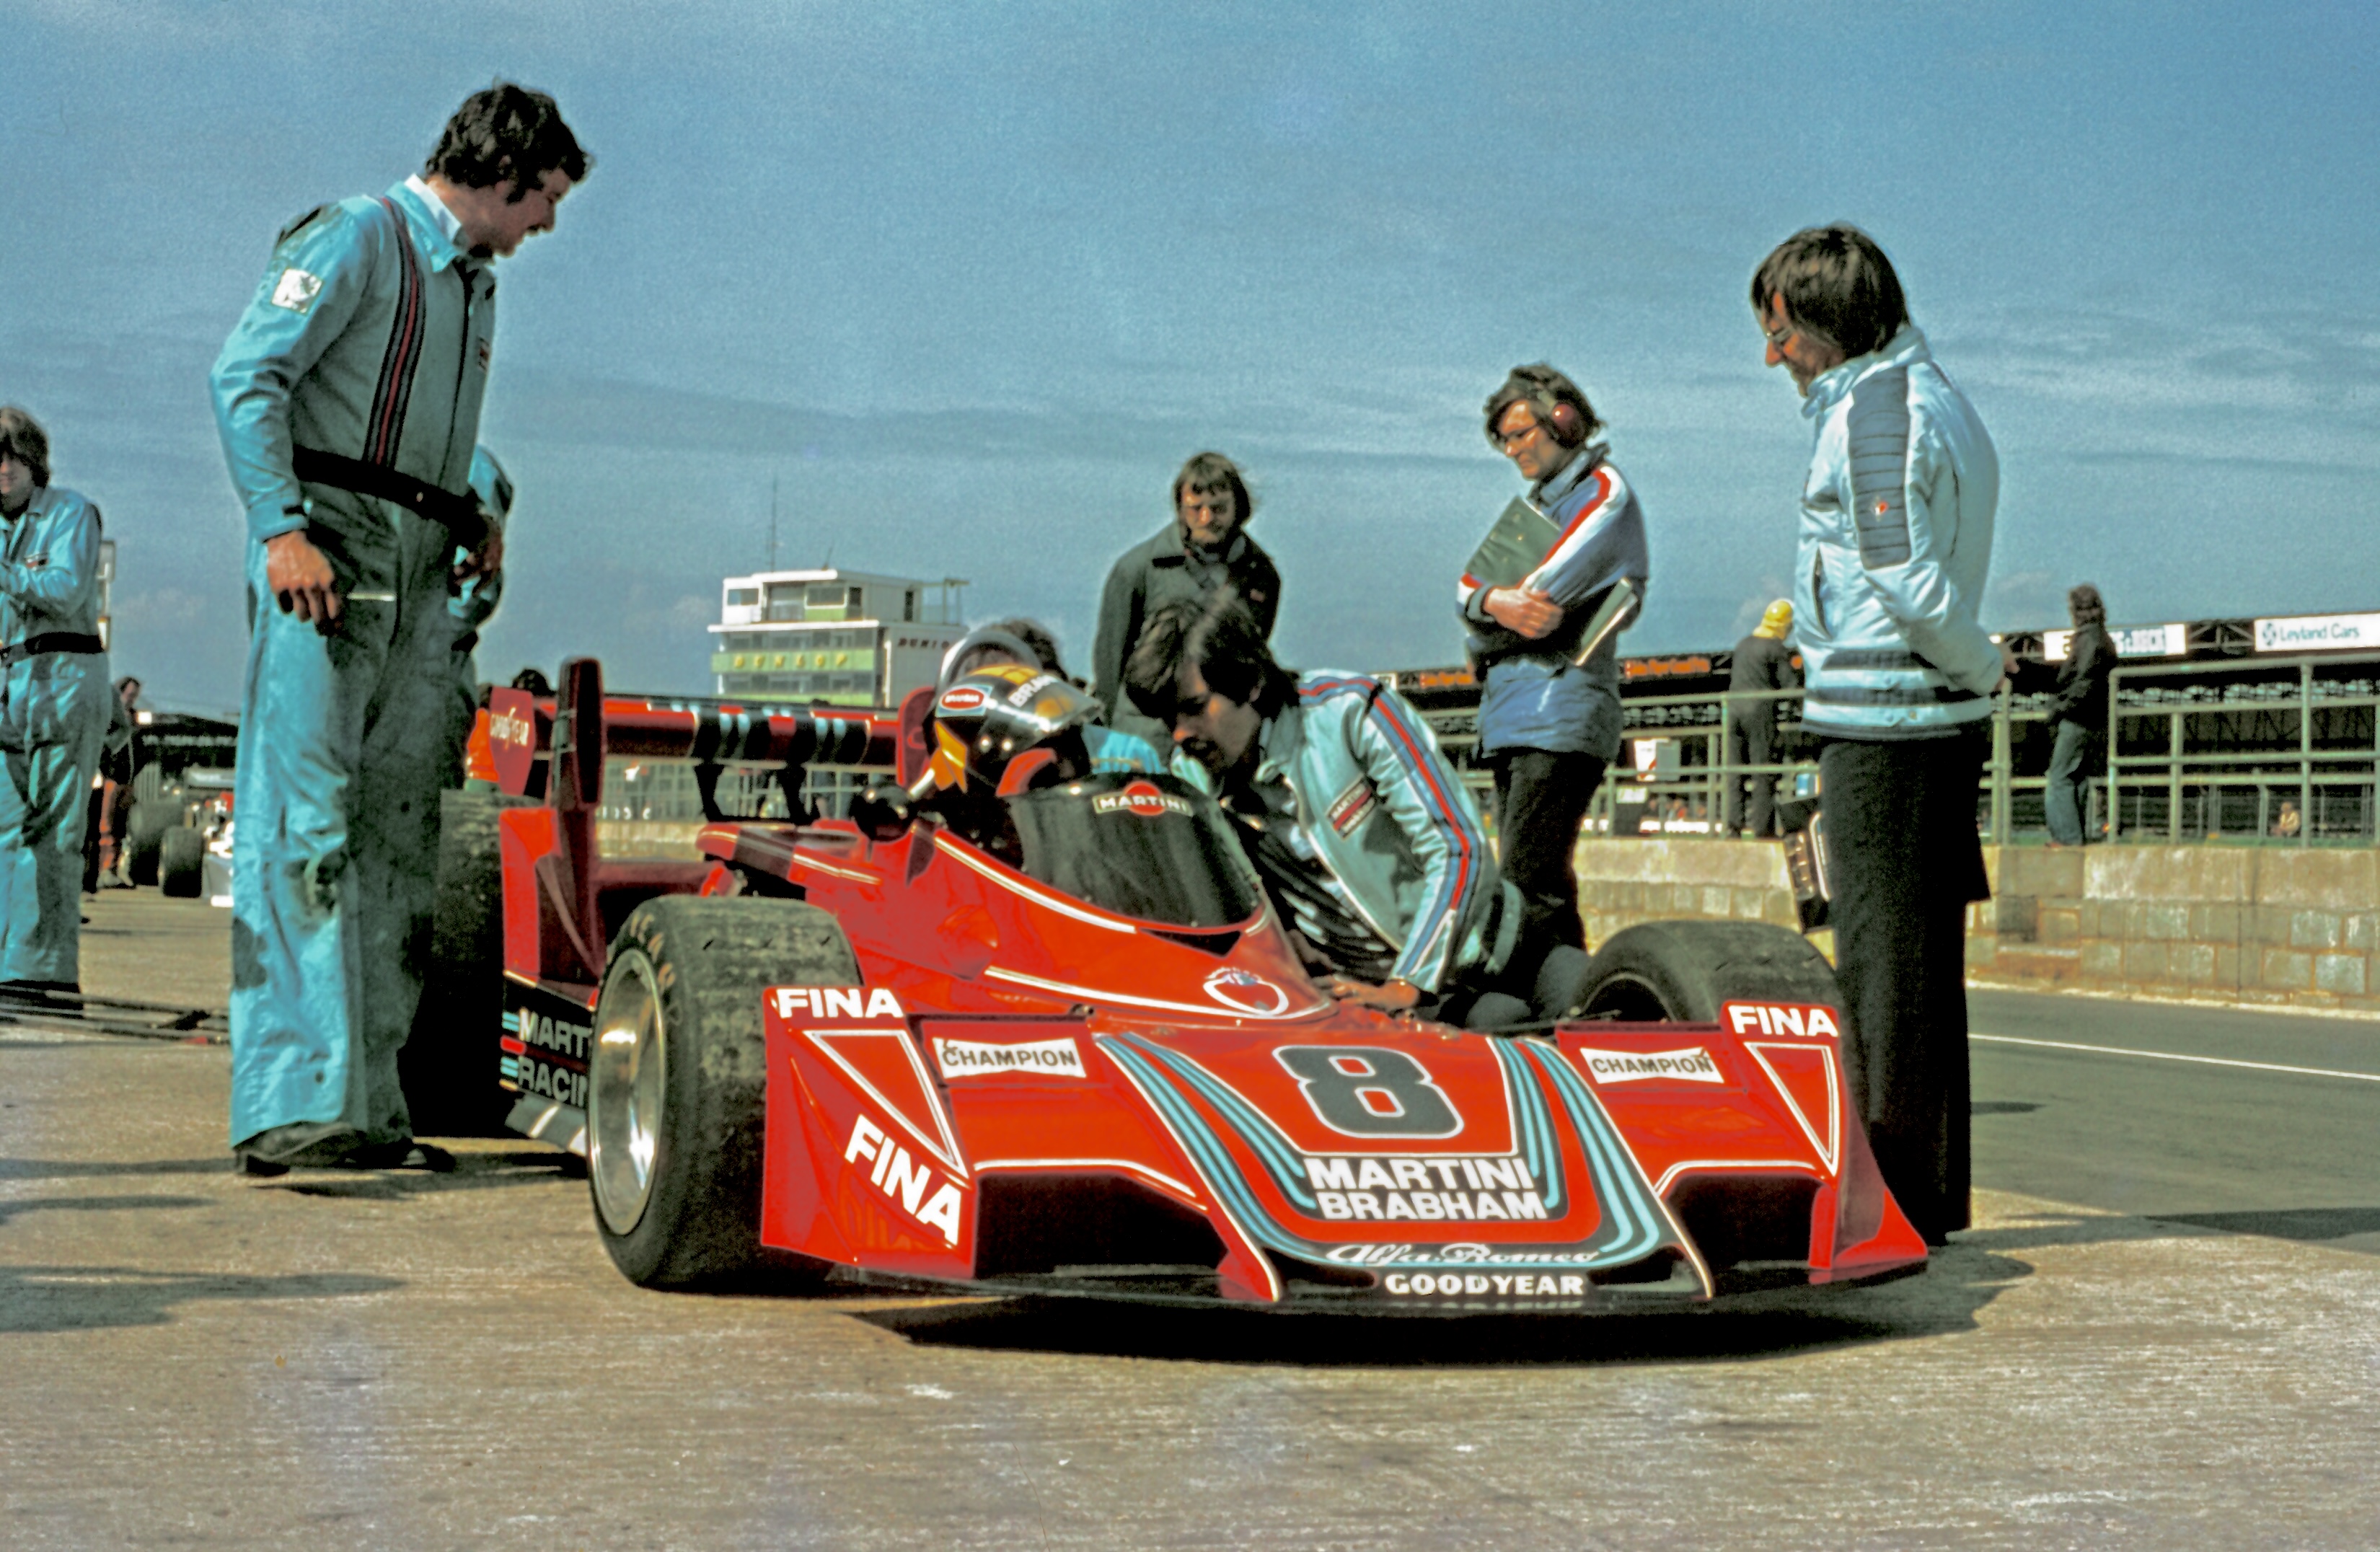 File:Carlos Pace Brabham BT45 1976 British Grand Prix front view.jpg -  Wikimedia Commons